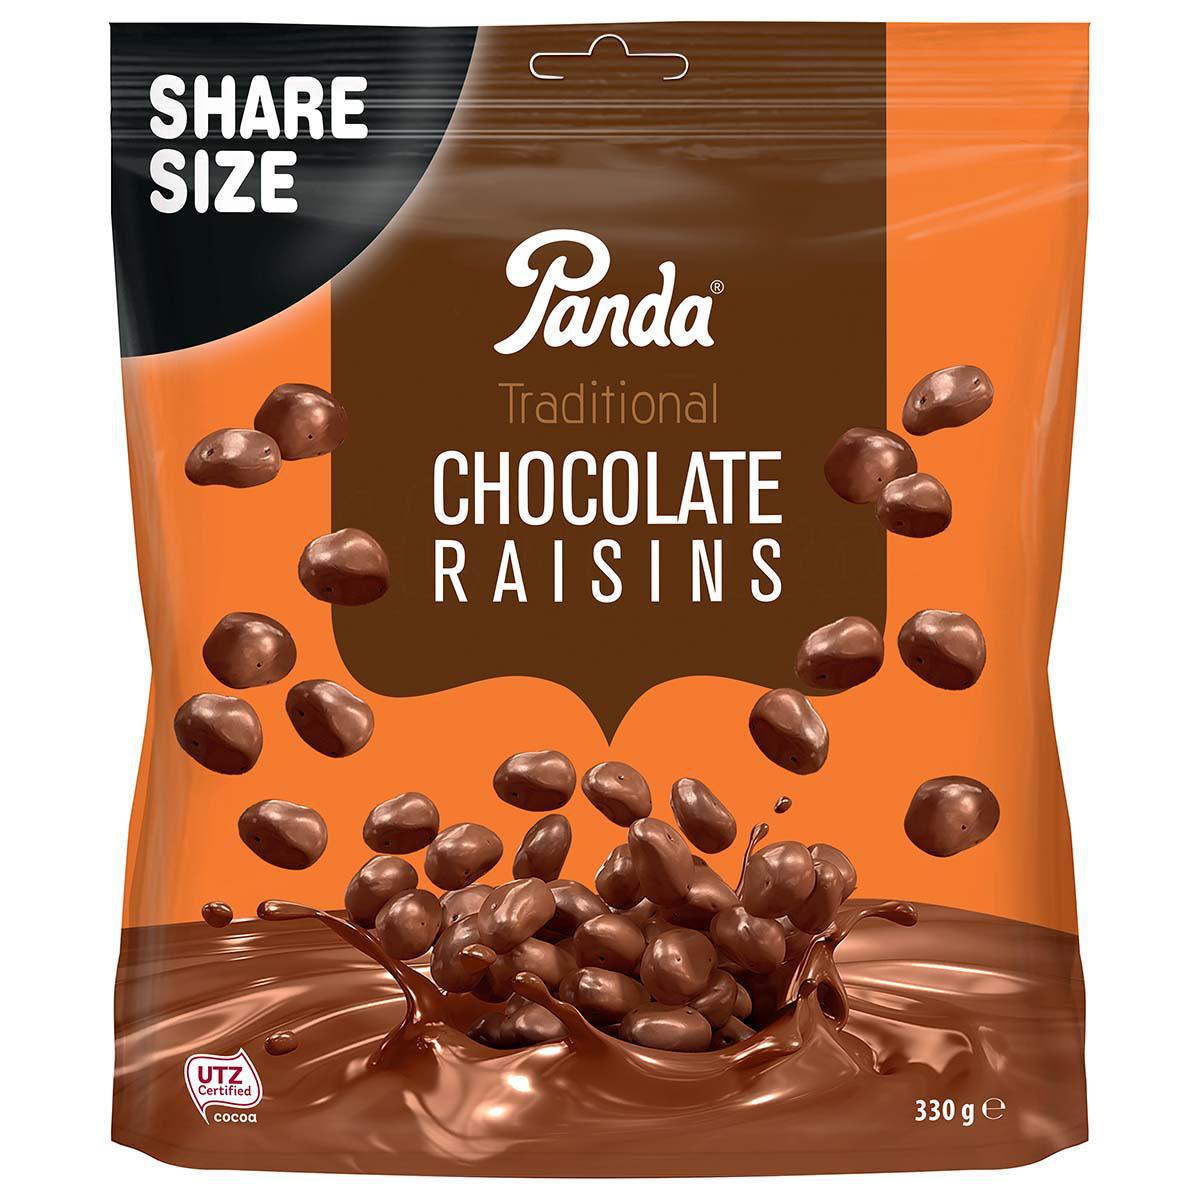 Chocolate Raisins 330g Share Size